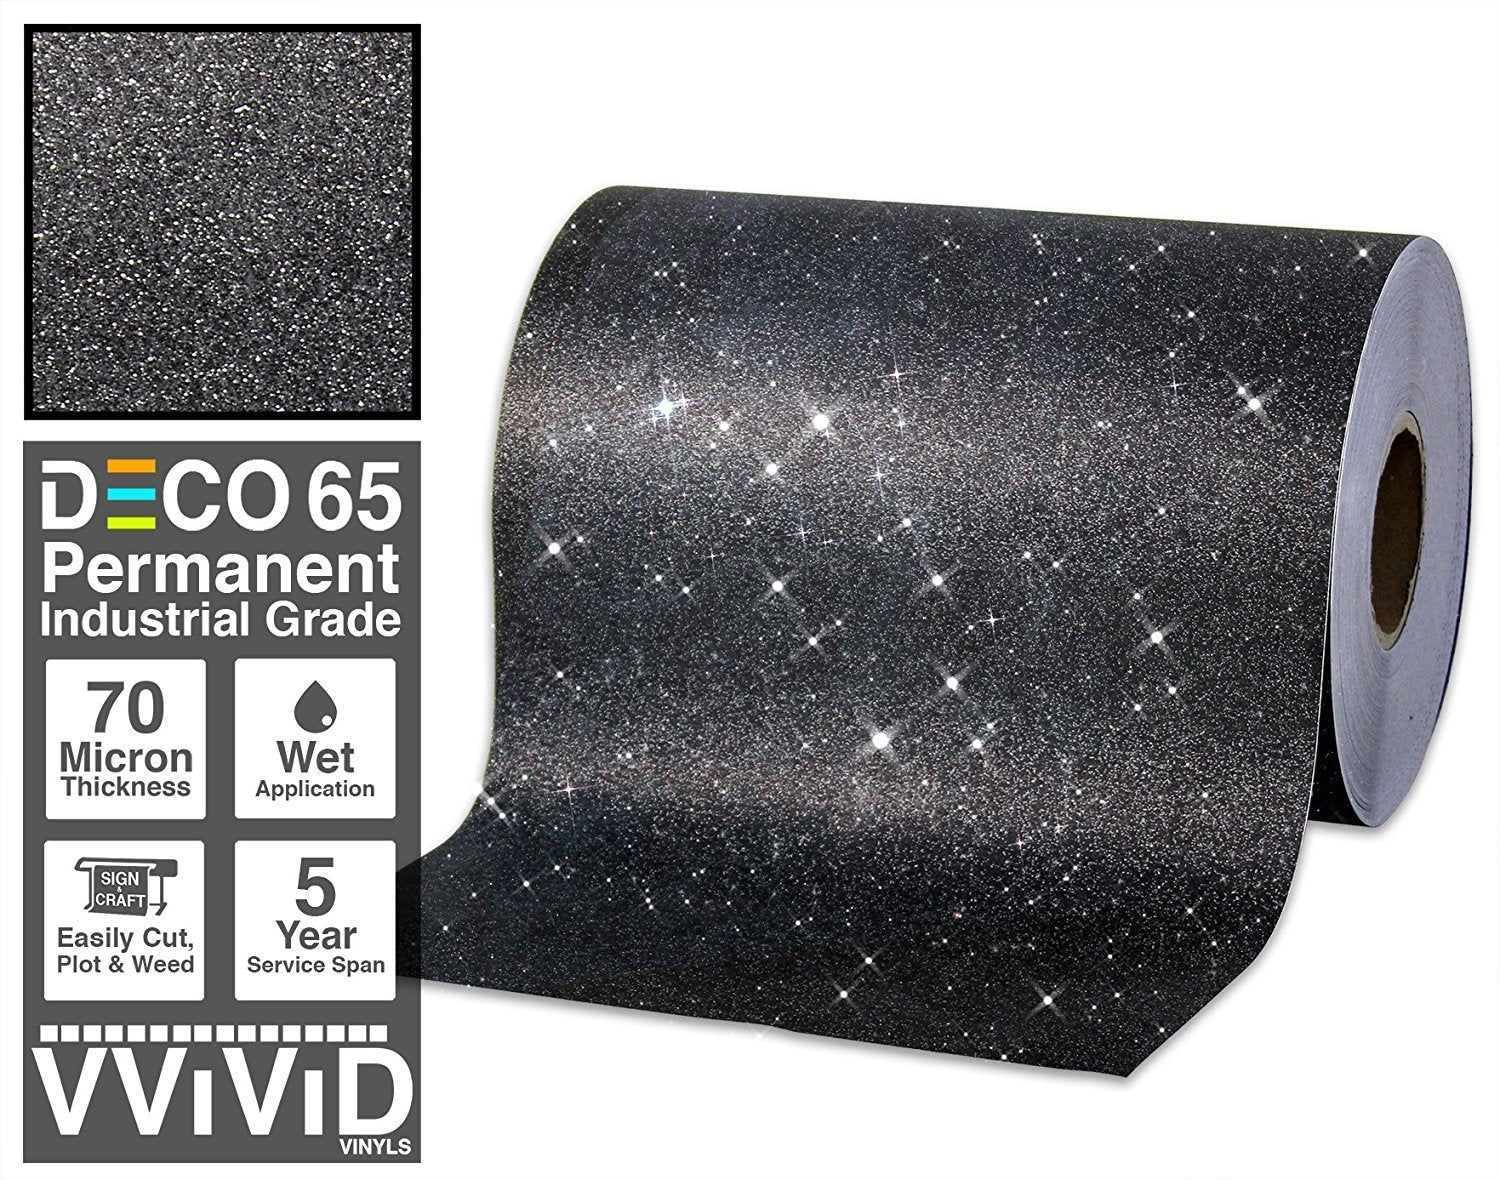 Deco65 Black Glitter Craft Vinyl - The VViViD Vinyl Wrap Shop